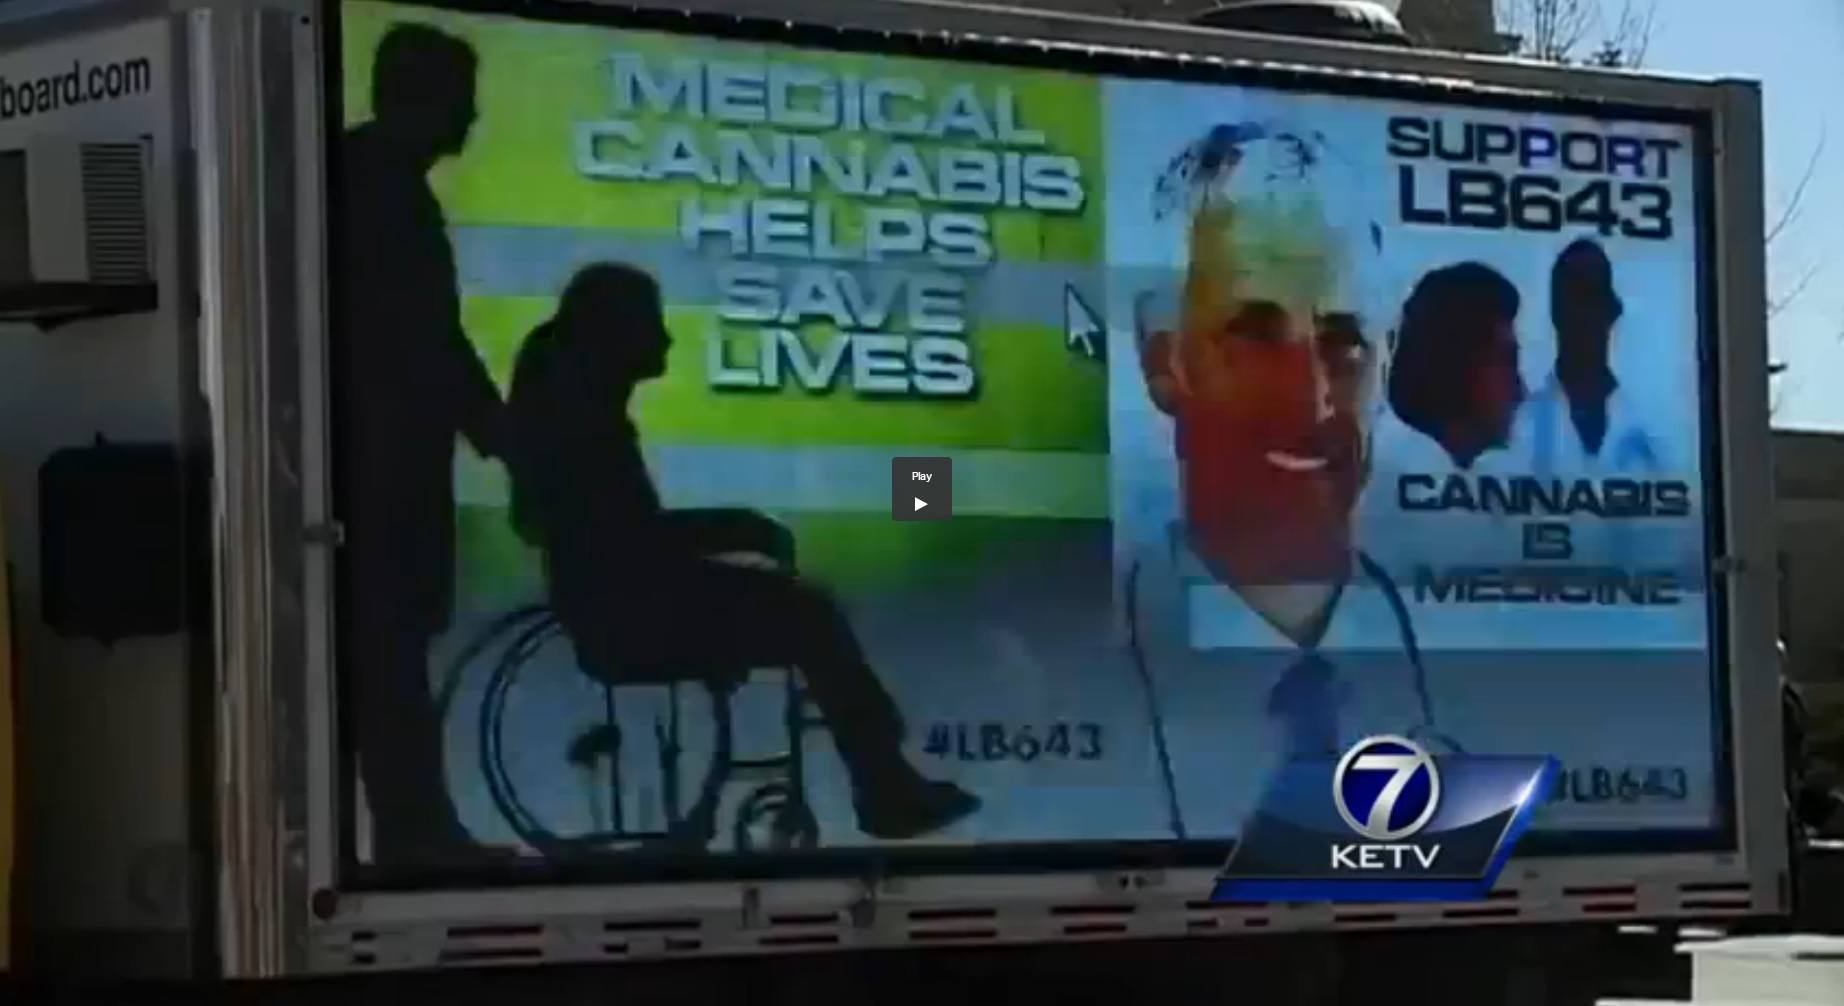 Image of Digital advertising truck promoting legalized medical marijuana in Nebraska 